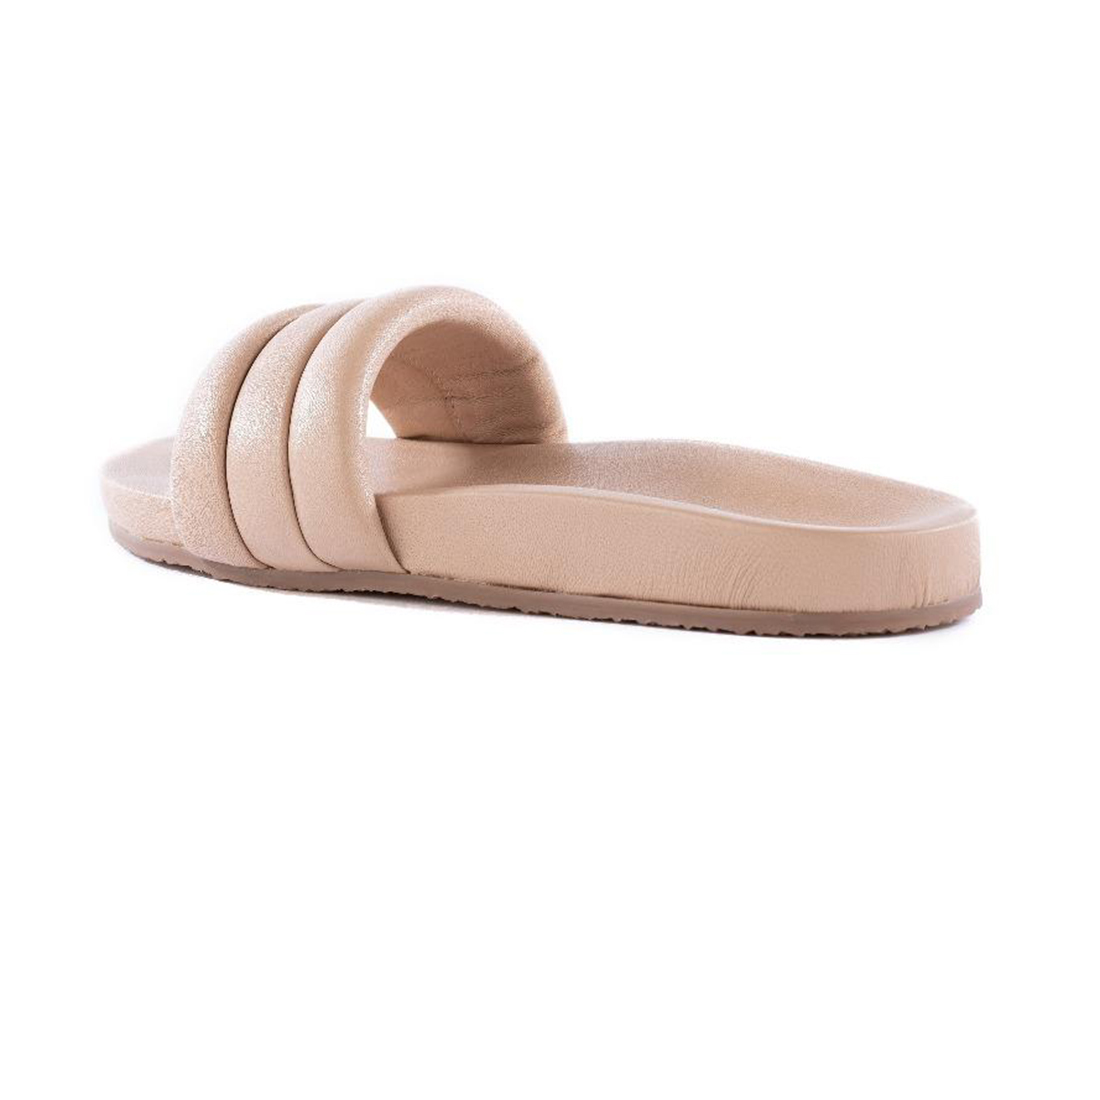 seychelles low key slide sandal in vacchetta leather 83710